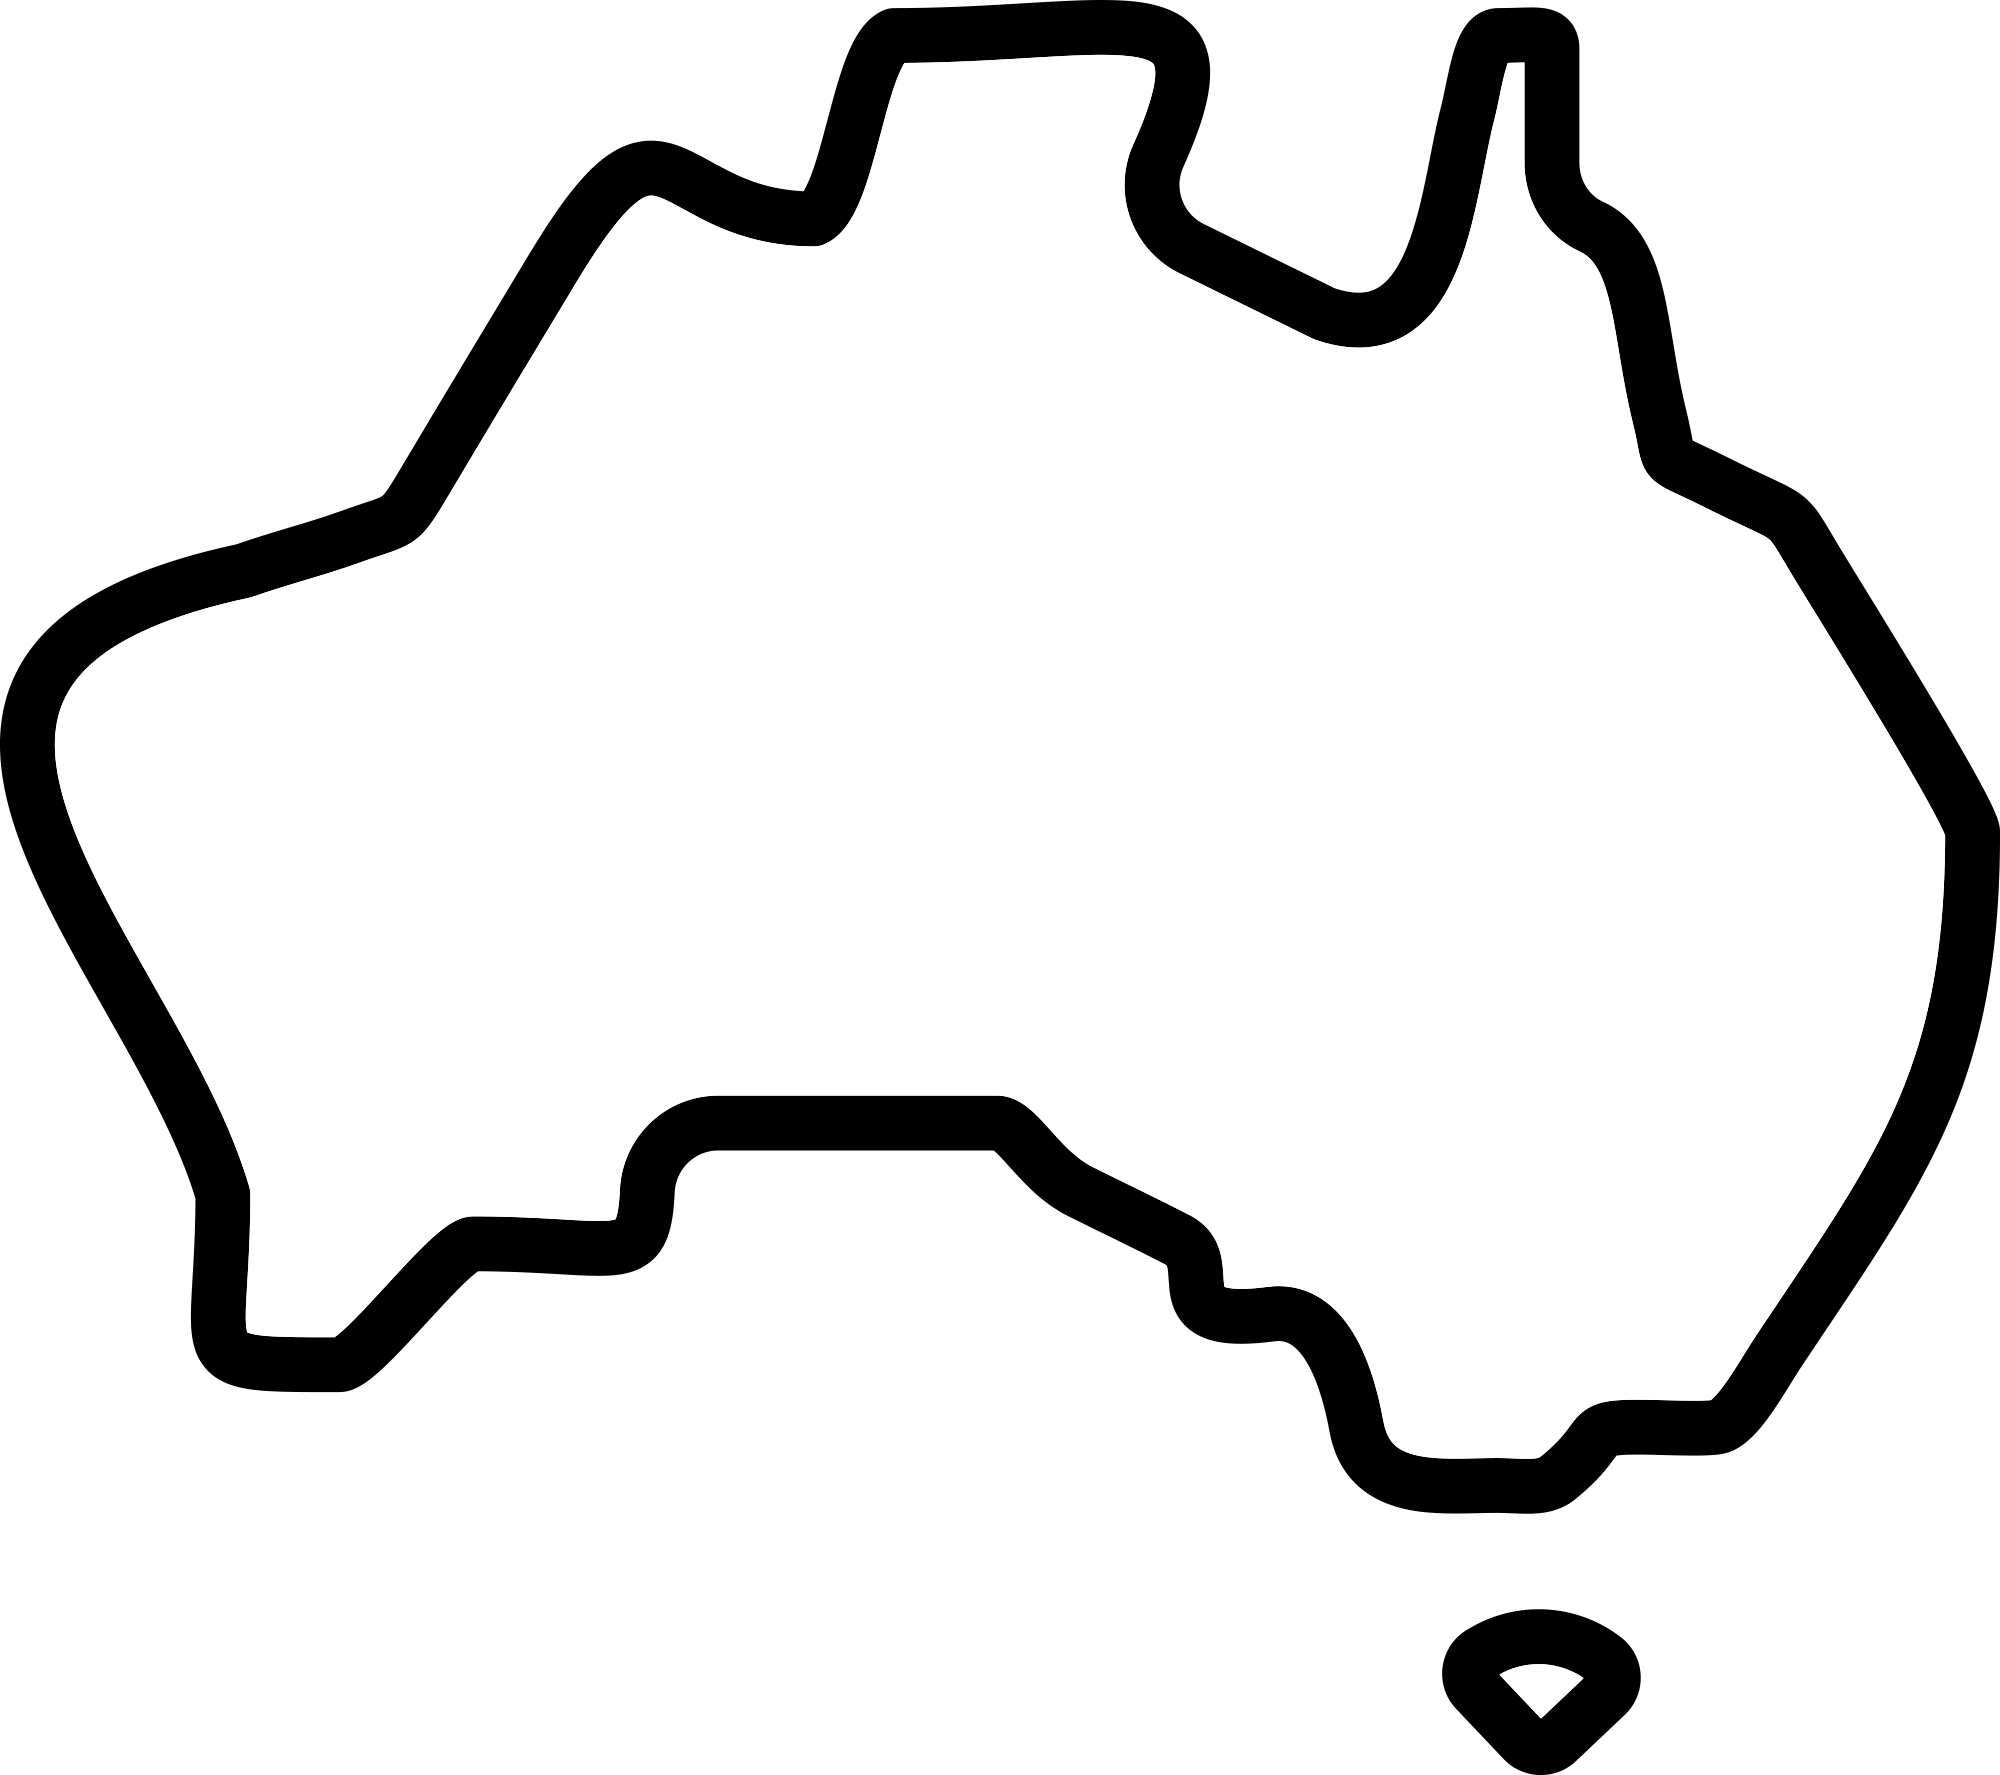 Australian-based Business trust badge showing outline of the Australia map